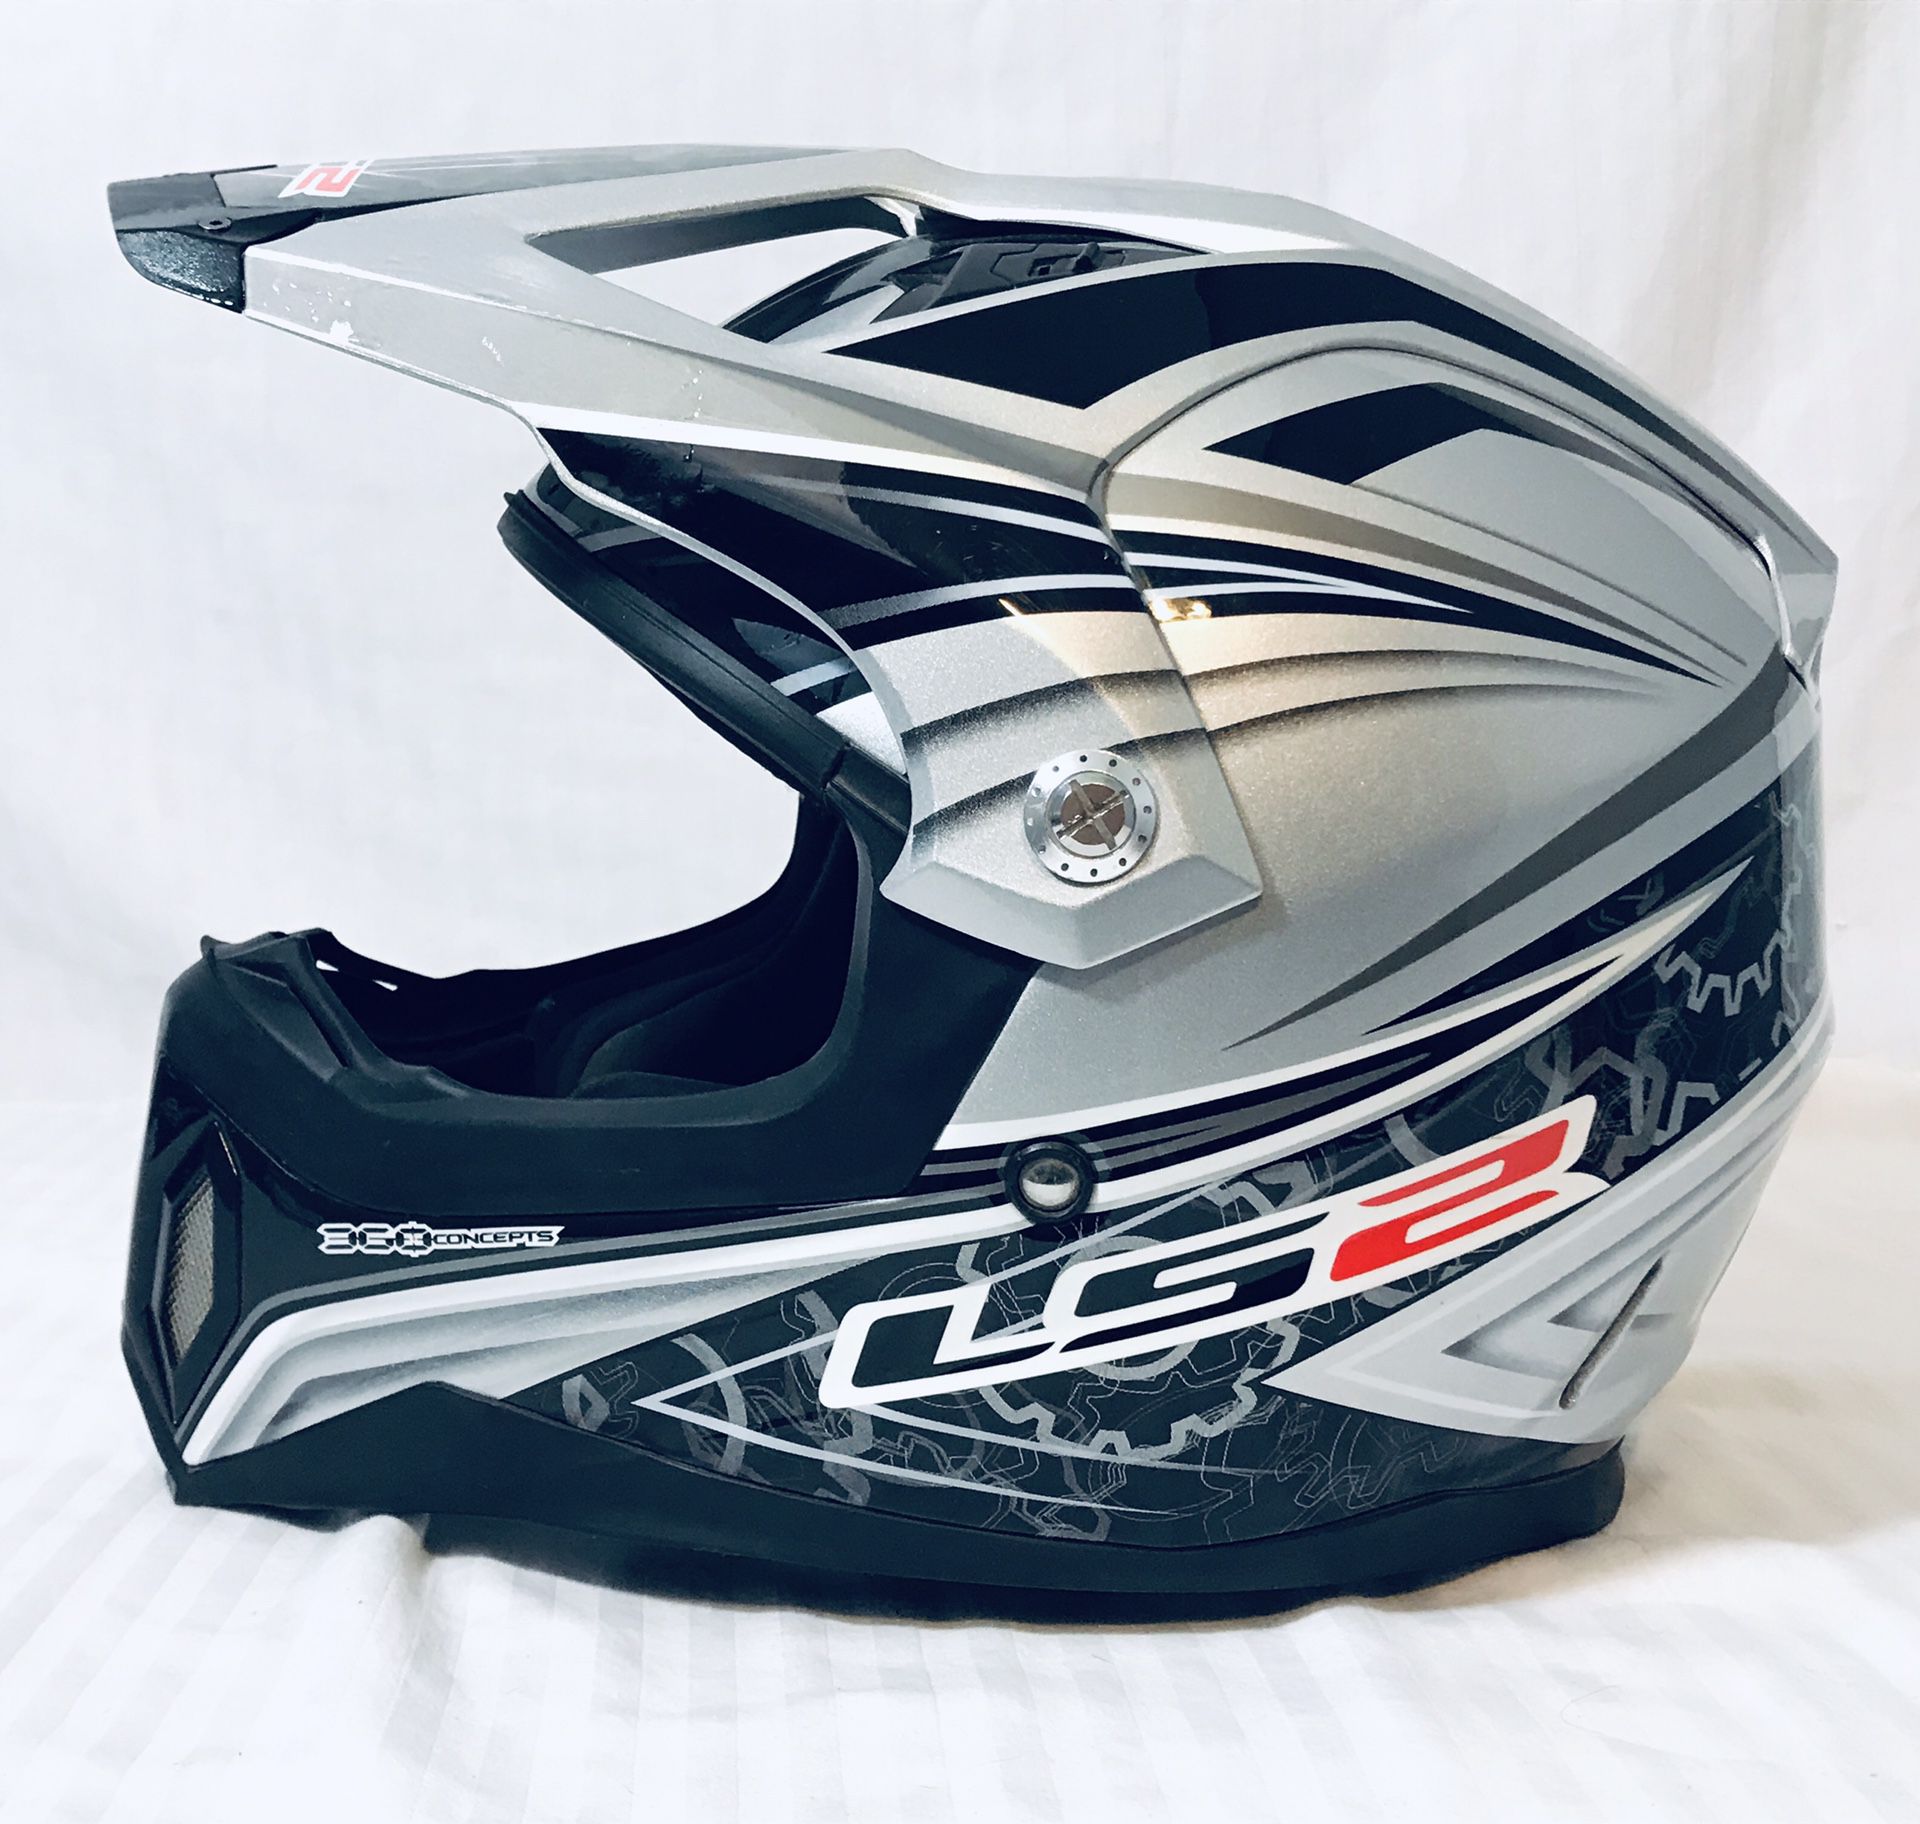 LS2 MX453 motorcycle helmet $179 retail